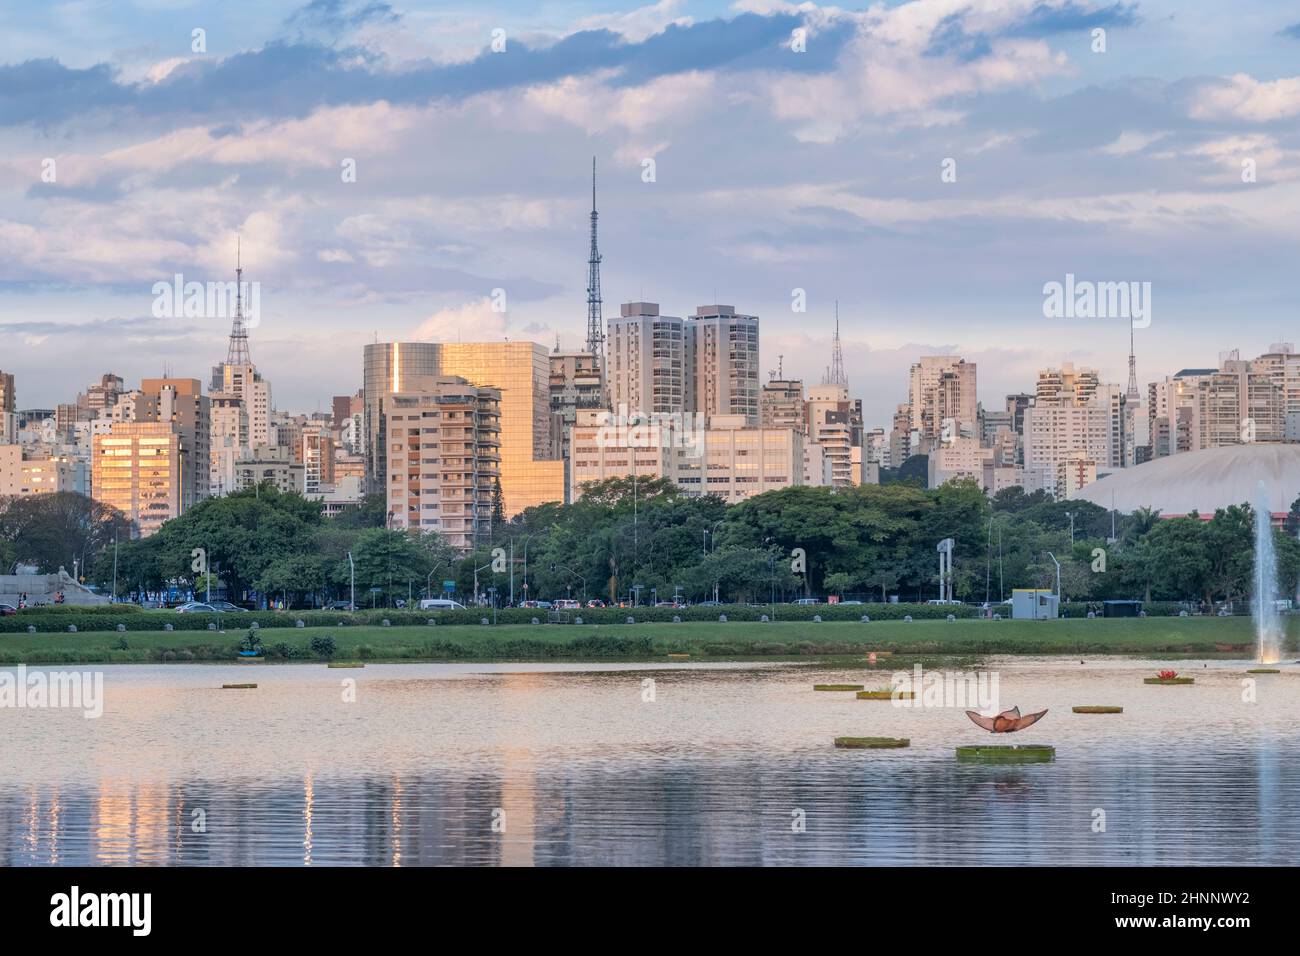 Brazil, Sao Paulo, Sao Paulo City, Ibirapuera Park and lake with the city skyline in the distance Stock Photo